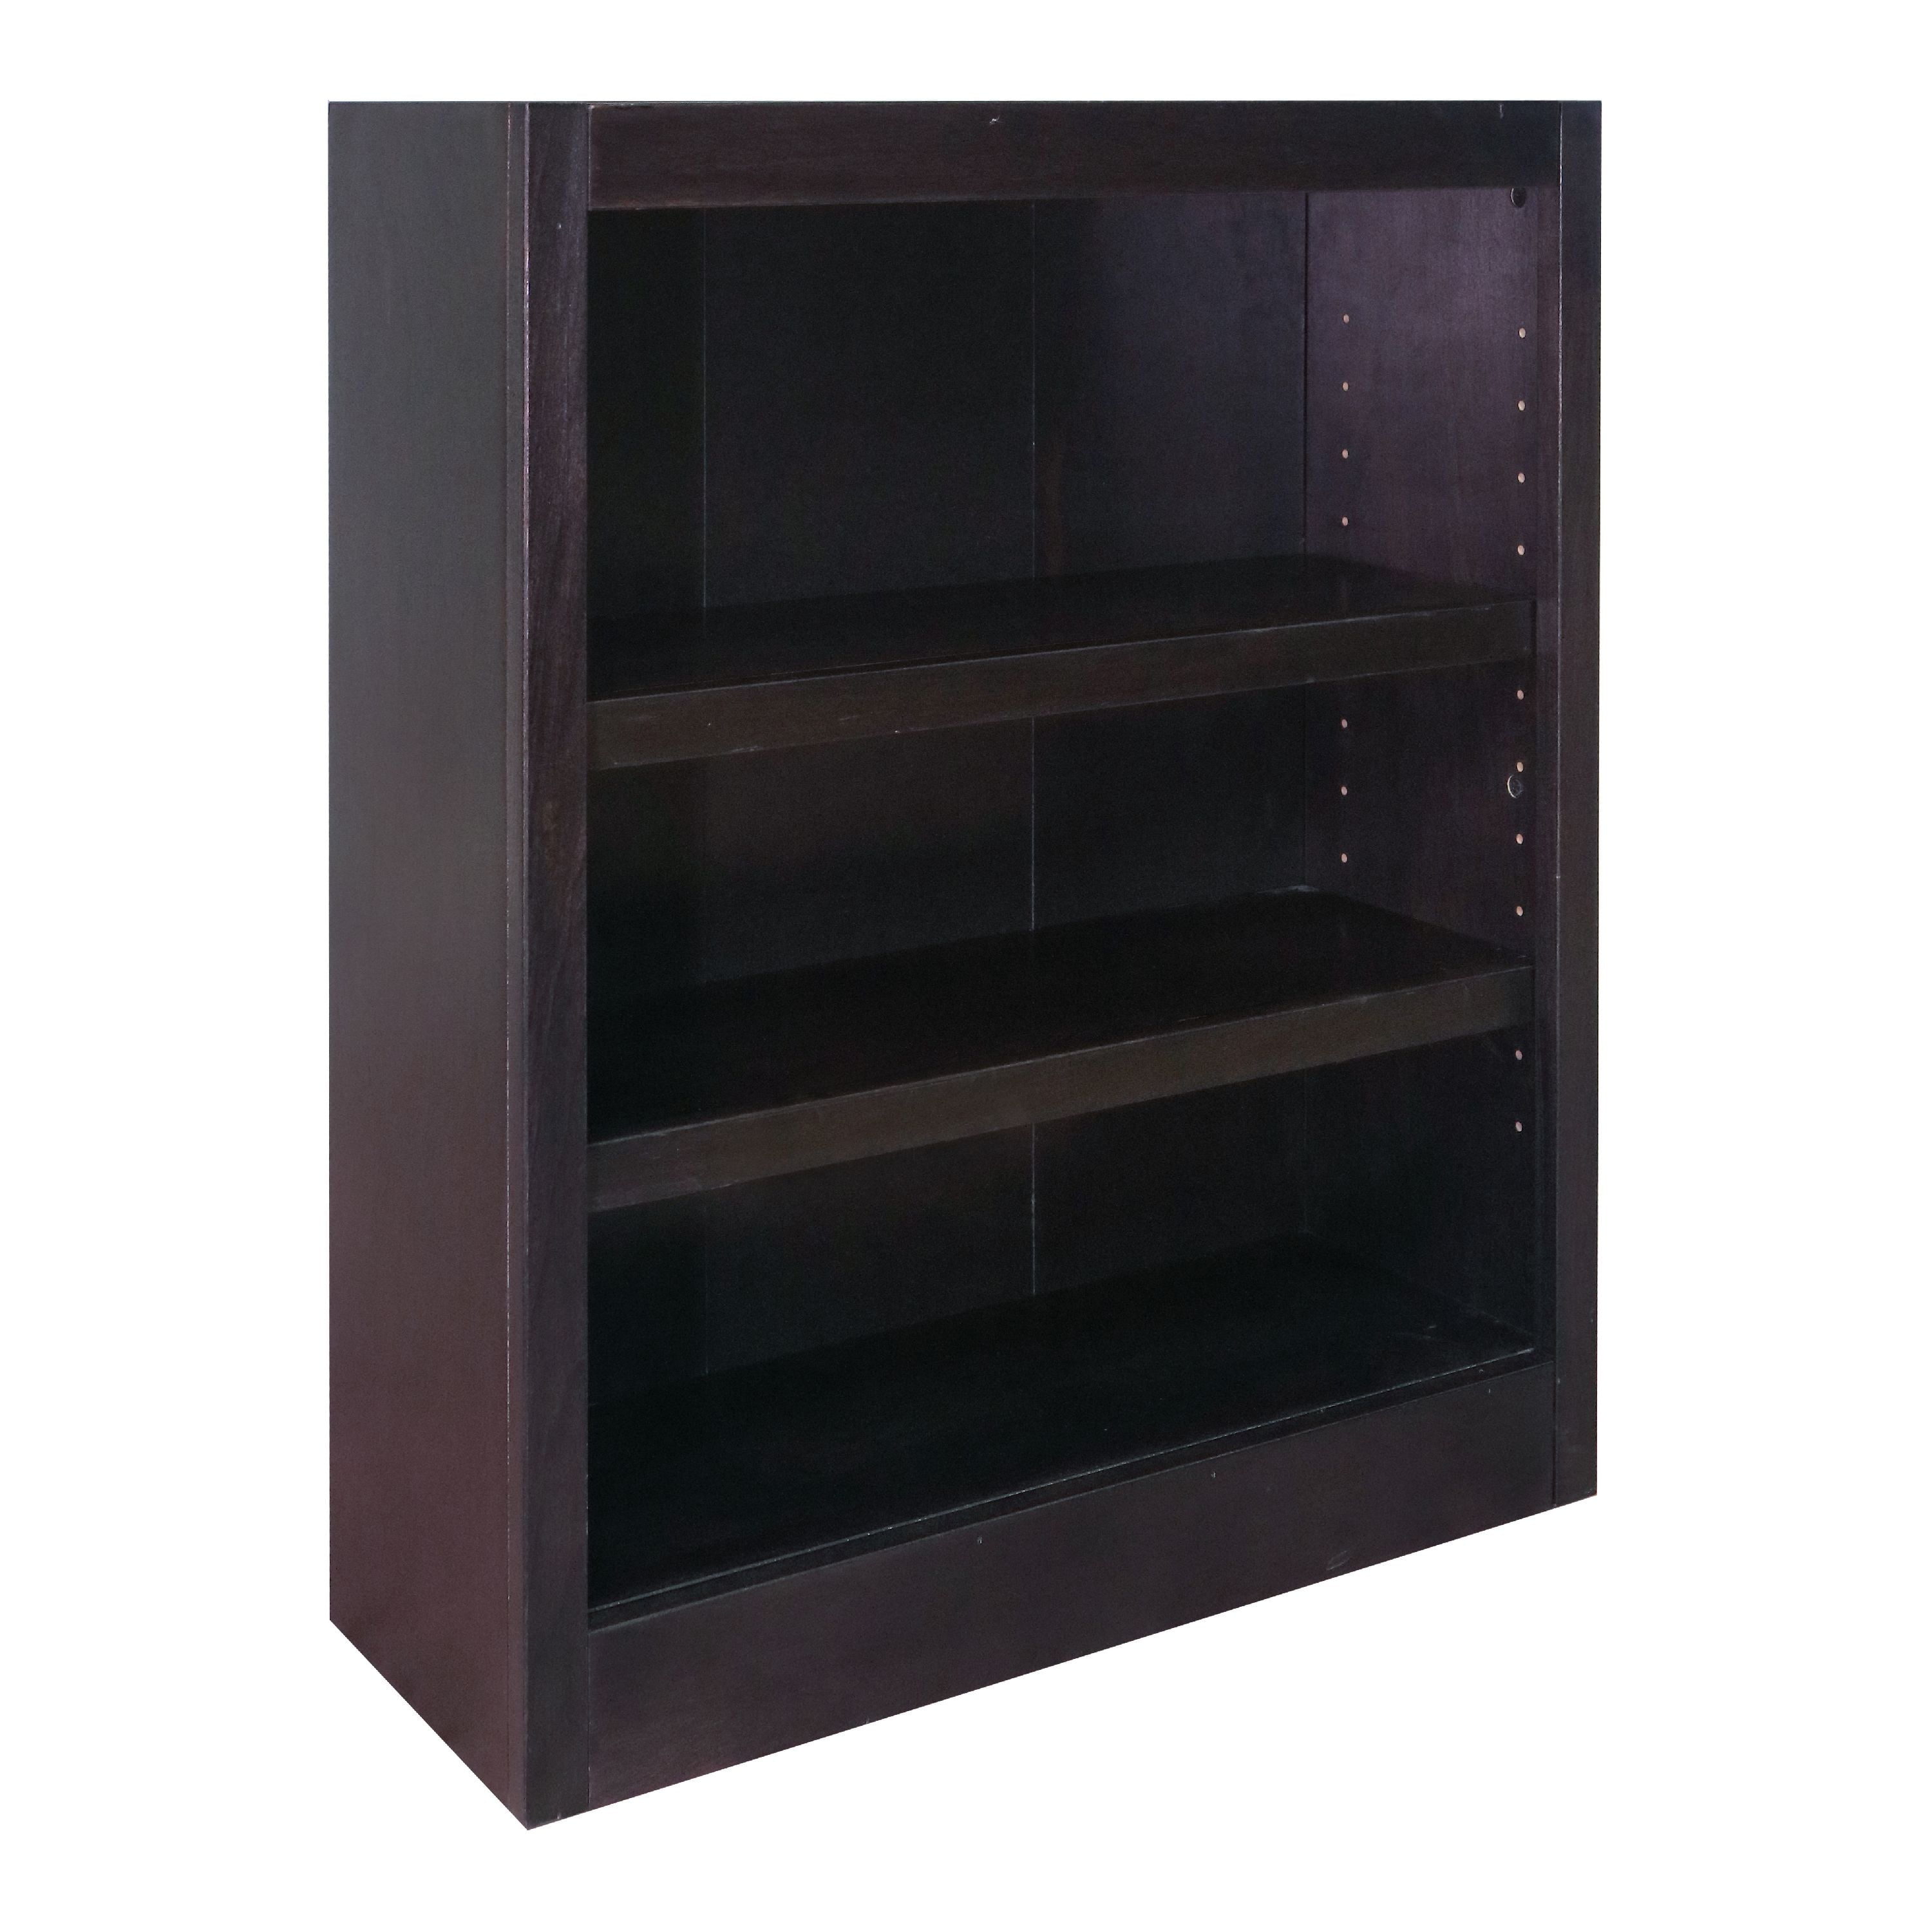 Double Bookcase Shelf Wood Wide 3 Shelves Open Storage Furniture Espresso Black 